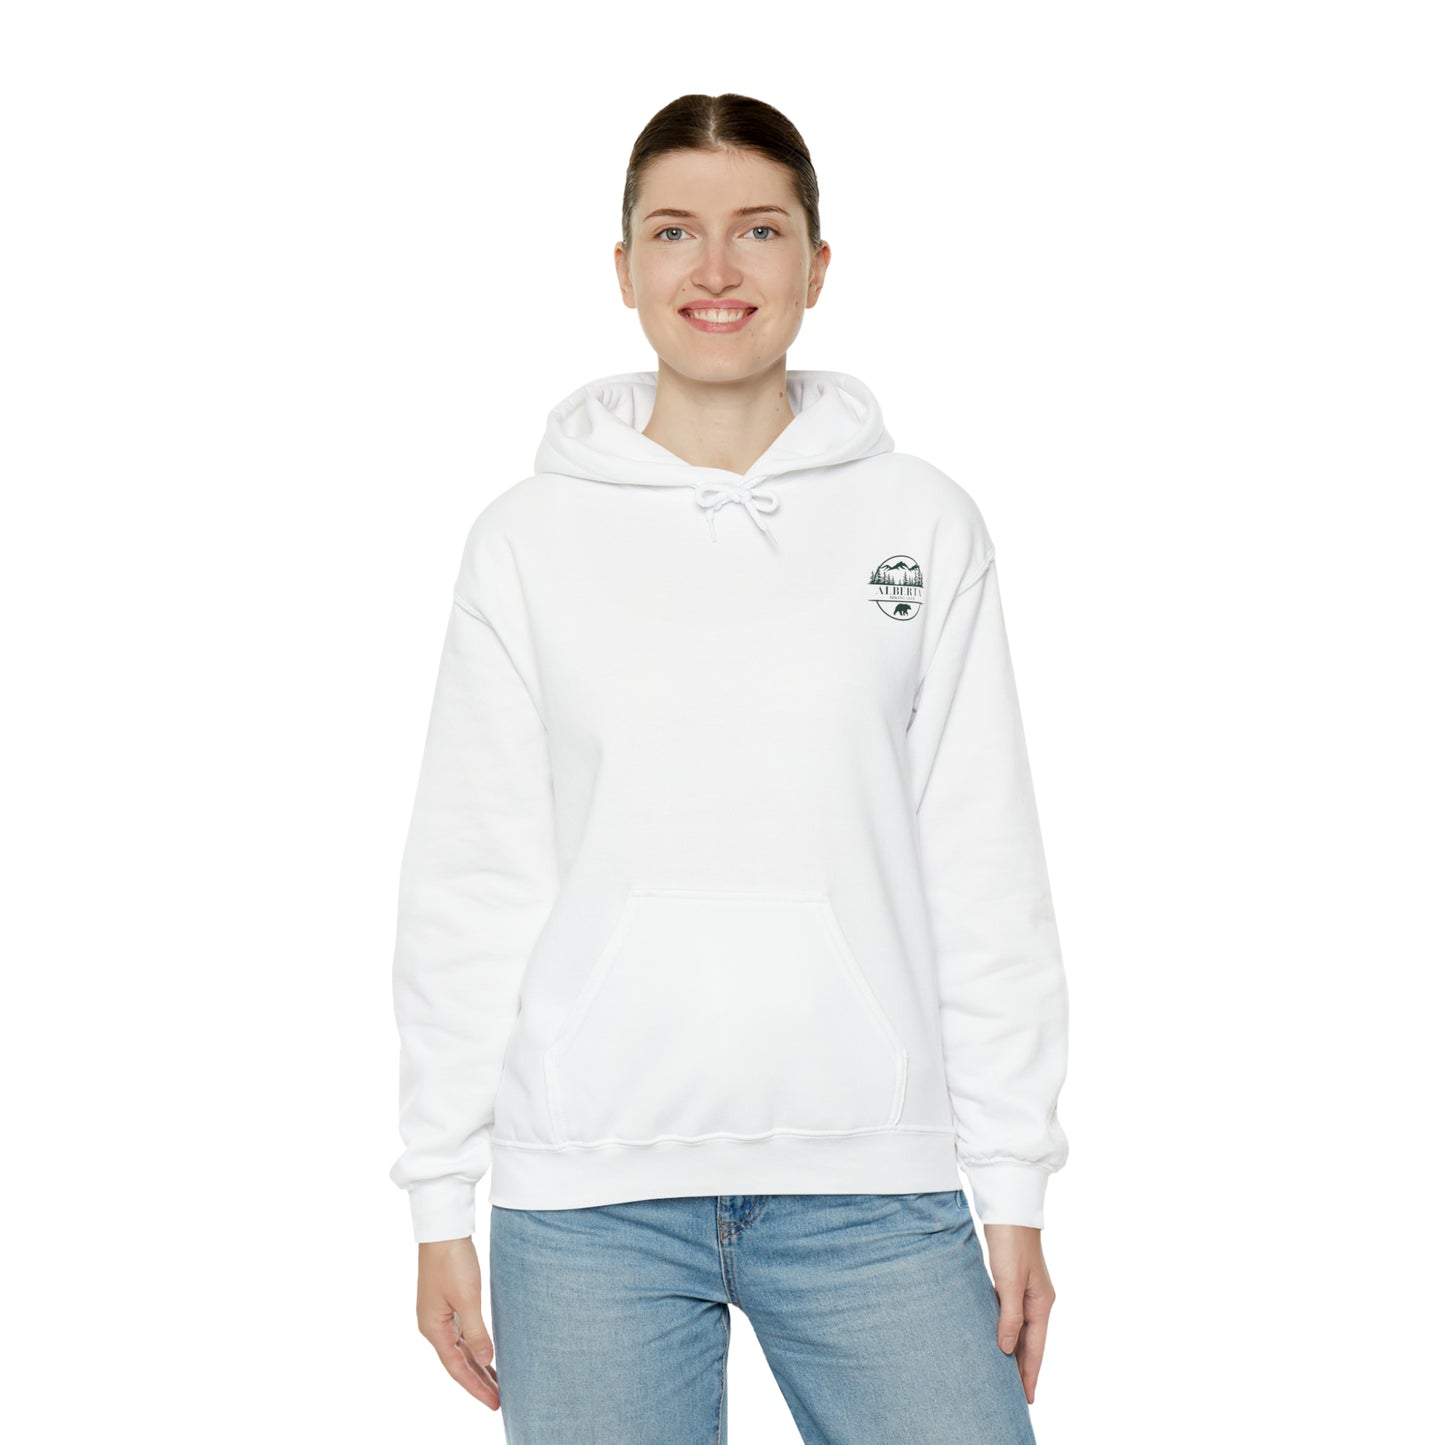 Alberta Hiking Club - Unisex Heavy Blend™ Hooded Sweatshirt